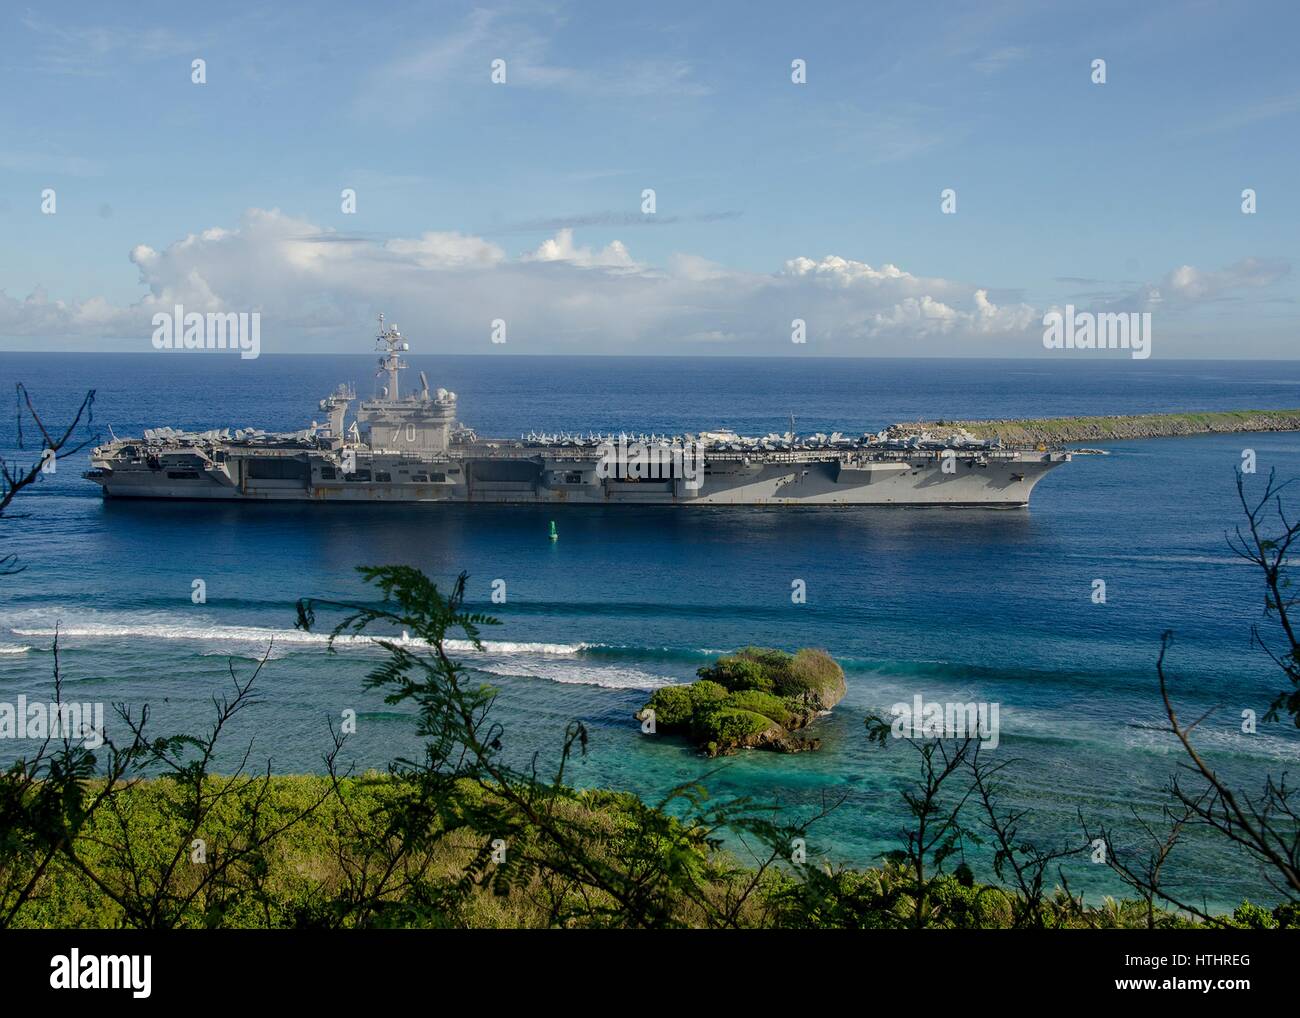 La US Navy clase Nimitz portaaviones USS Carl Vinson llega a la Base Naval de Guam el 10 de febrero de 2017 en Santa Rita, Guam. Foto de stock